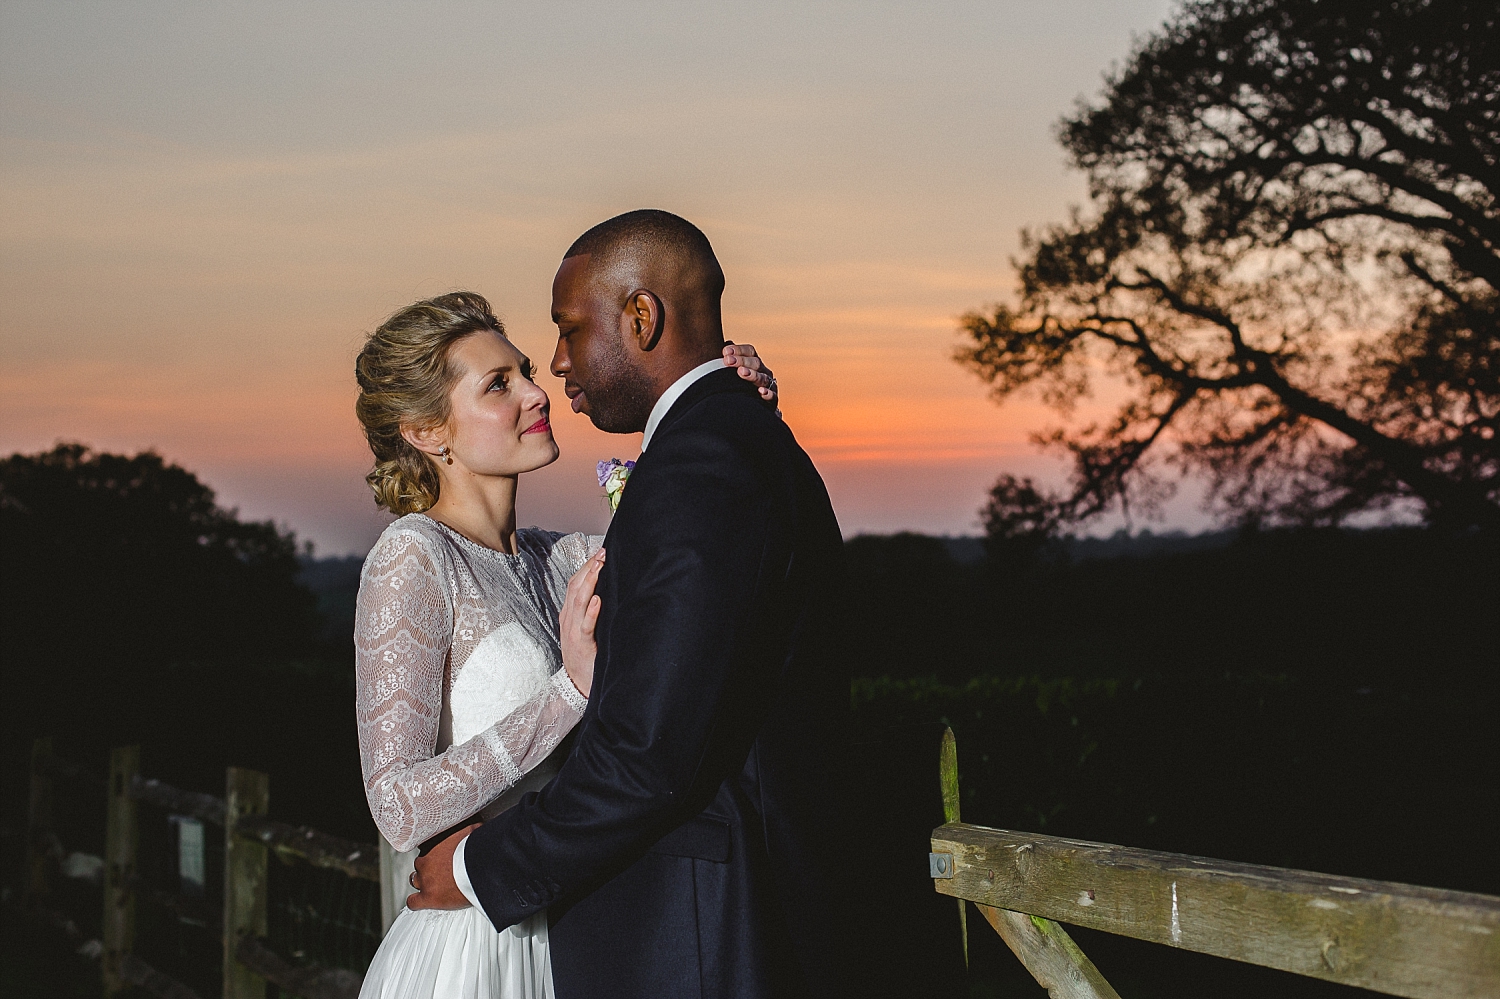 Gaynes Park Wedding Photographer - Sunset Couple Portrait